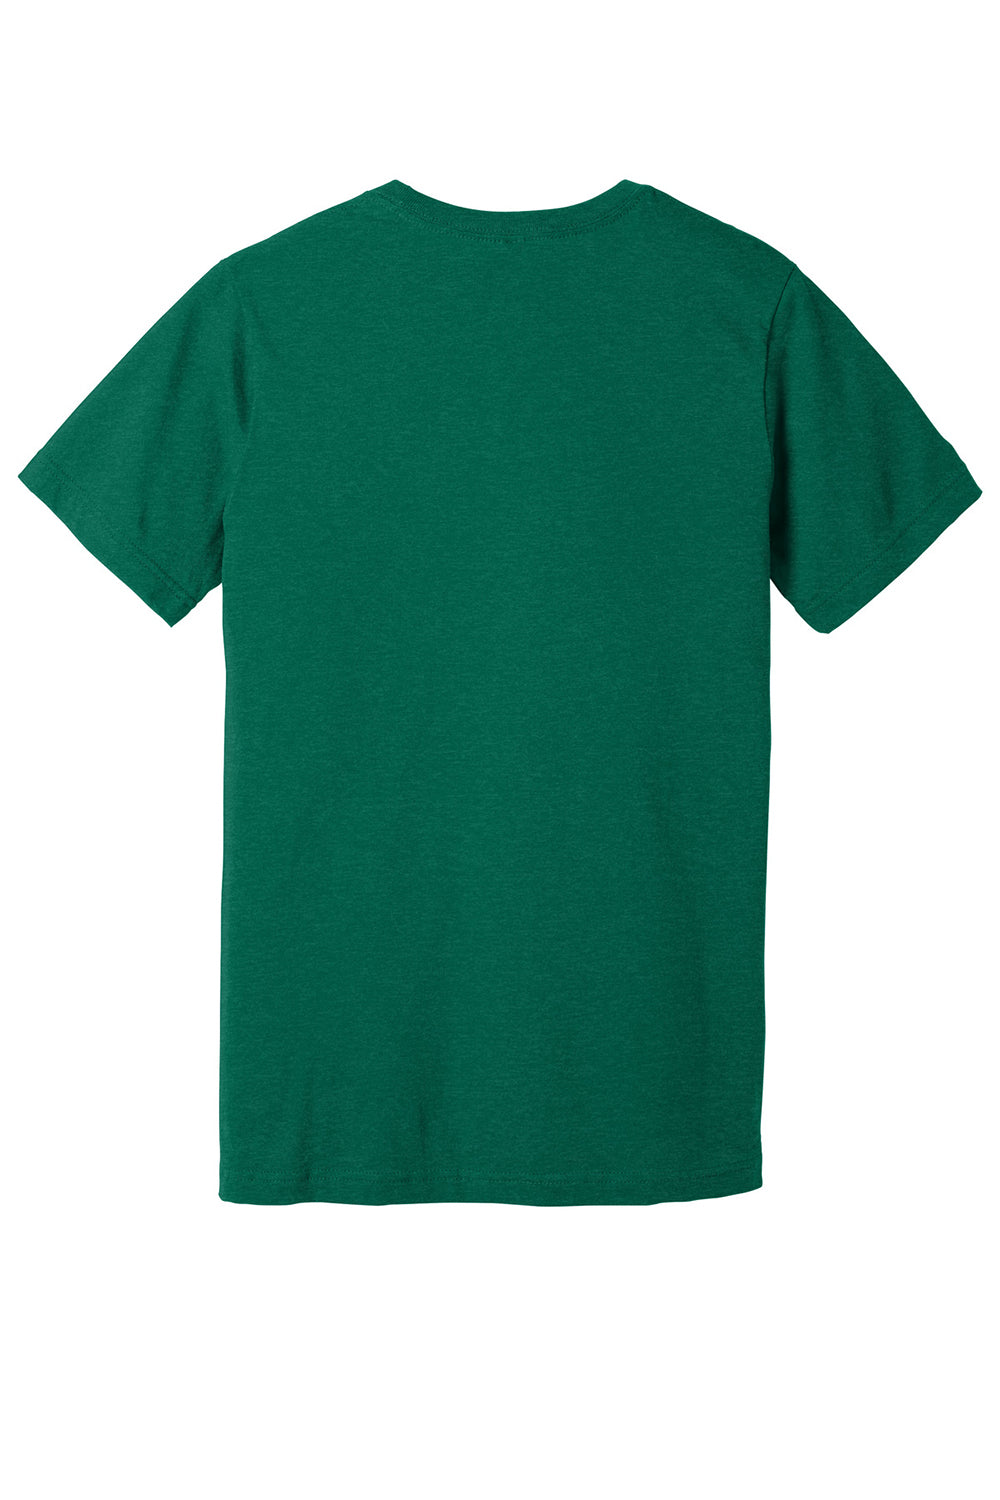 Bella + Canvas BC3005CVC Mens CVC Short Sleeve V-Neck T-Shirt Heather Grass Green Flat Back